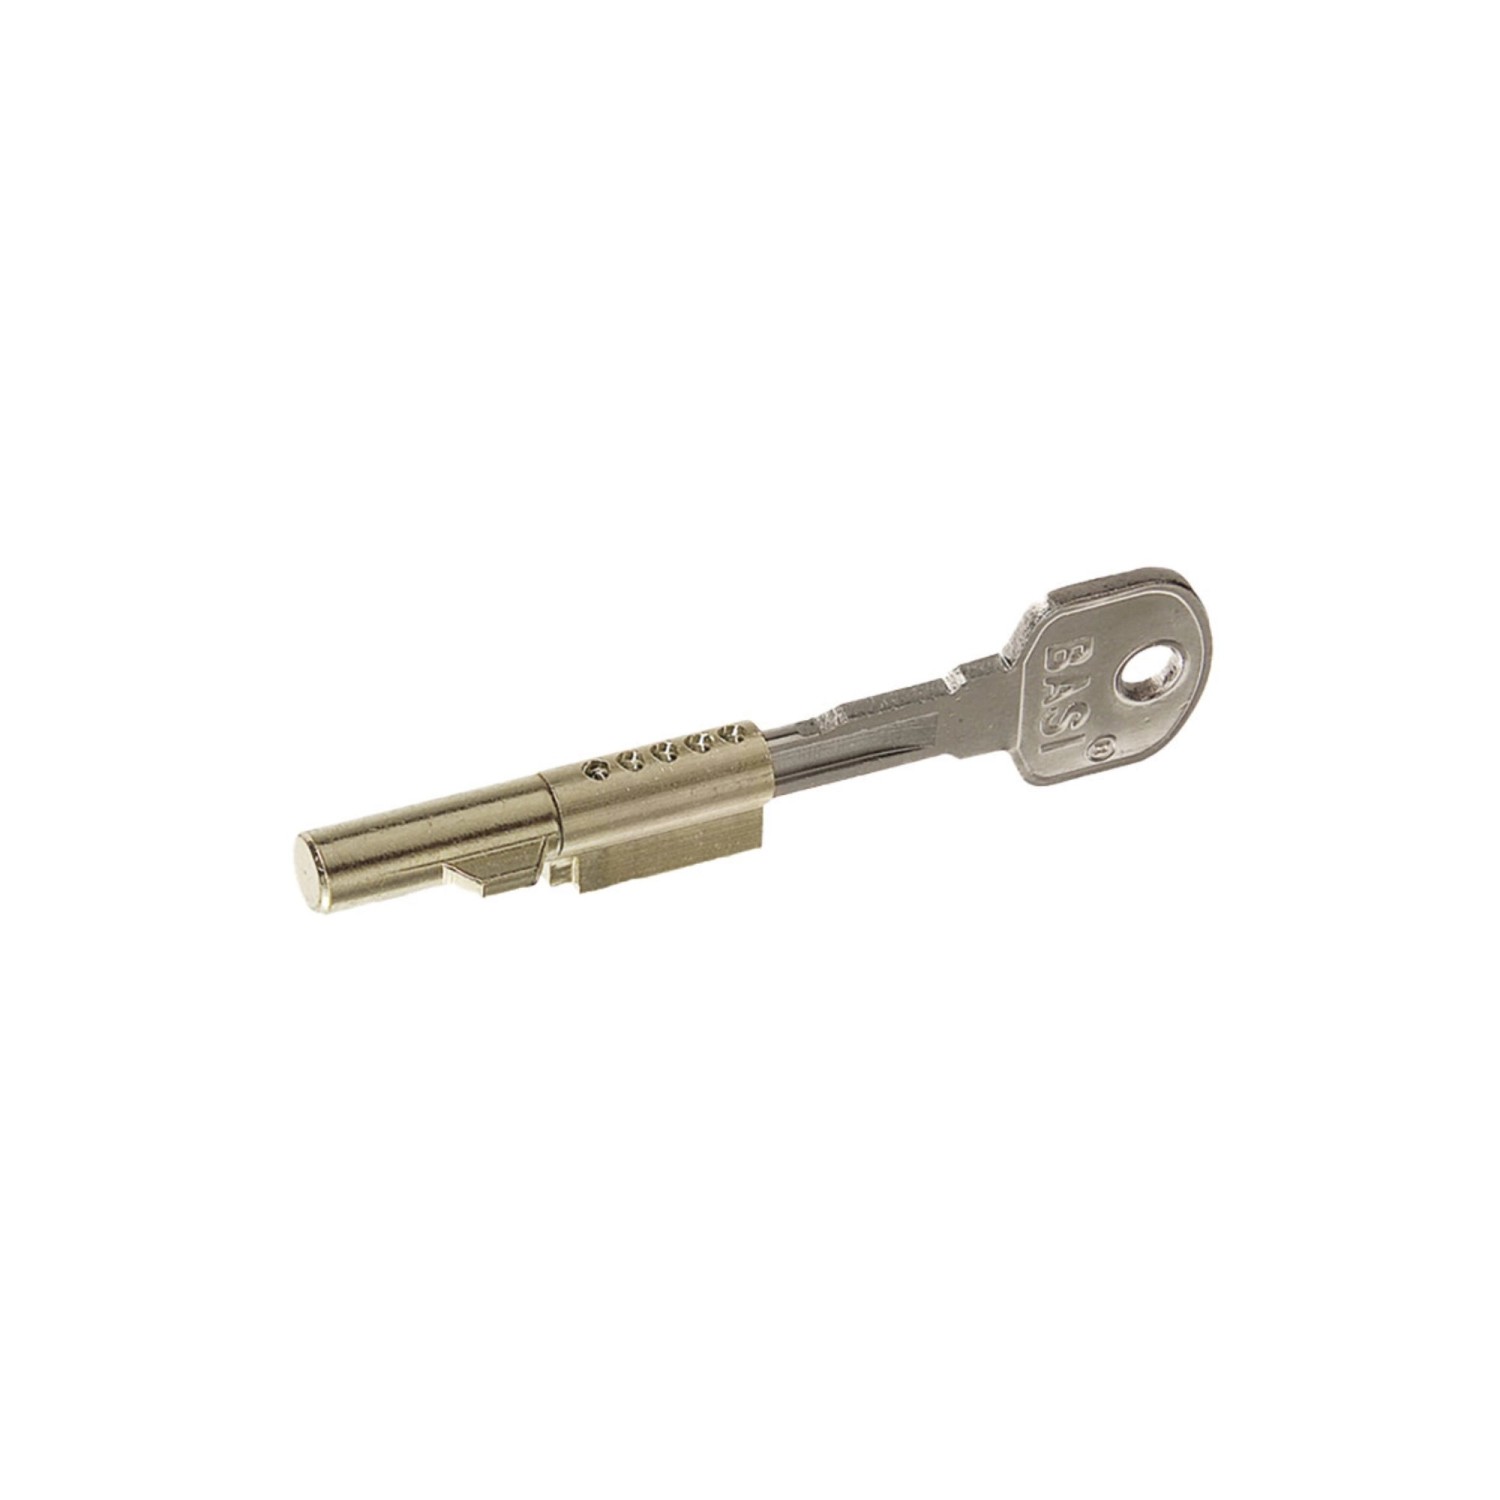 Basi - Schlüssellochsperrer - SS 12 - Verschiedenschließend - 9000-1200